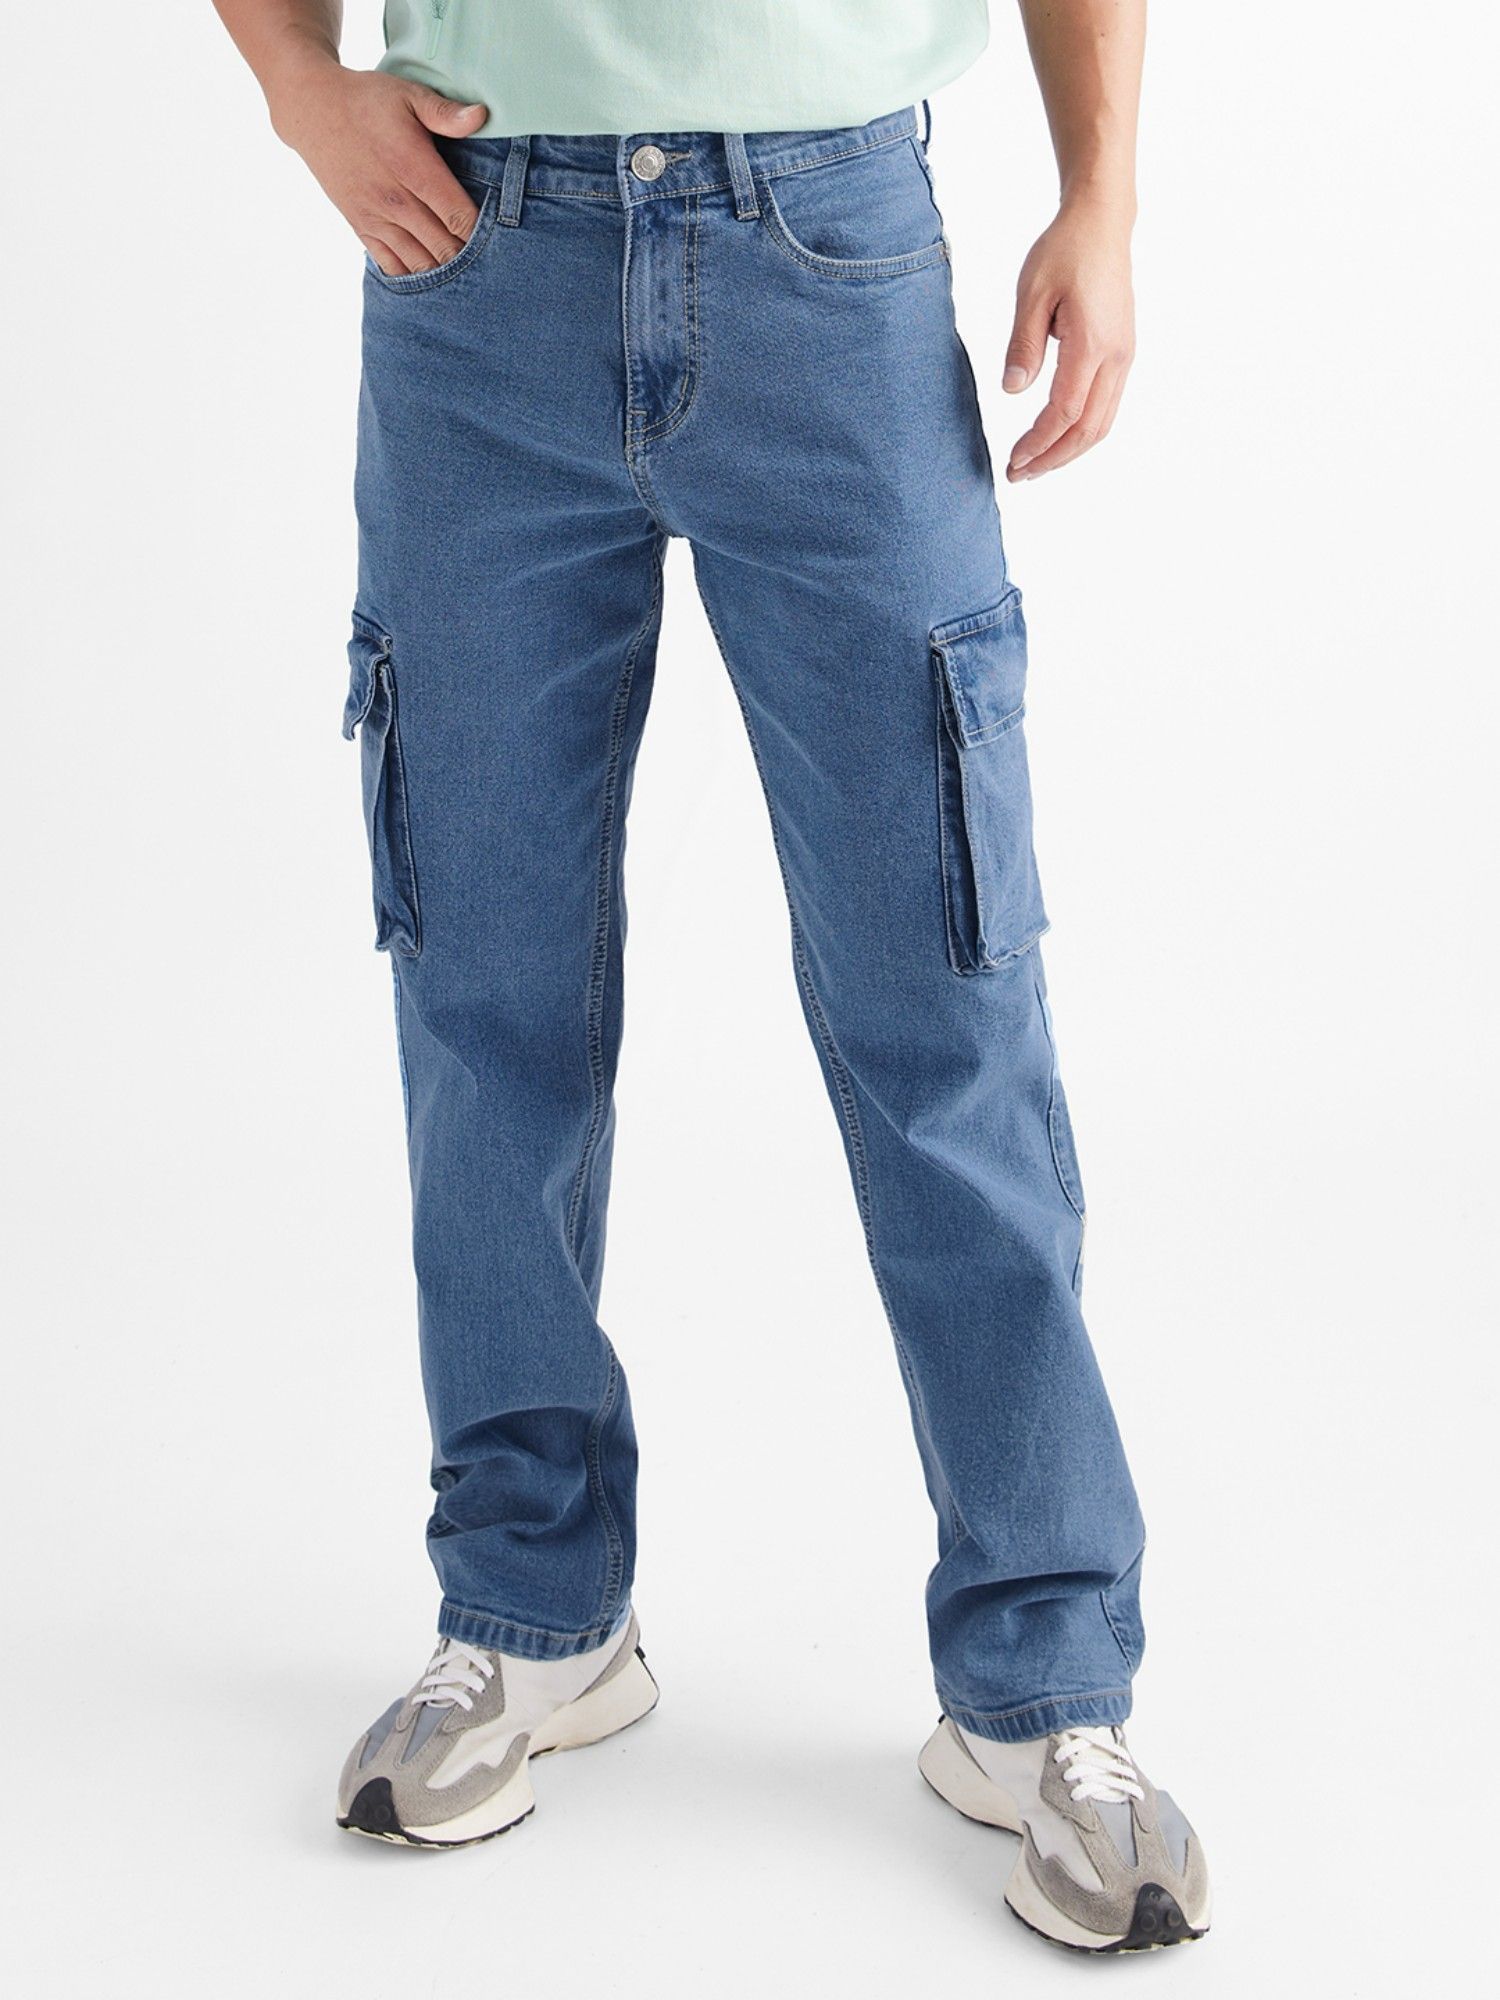 Denim Cargo Jeans | Only $114.00 |